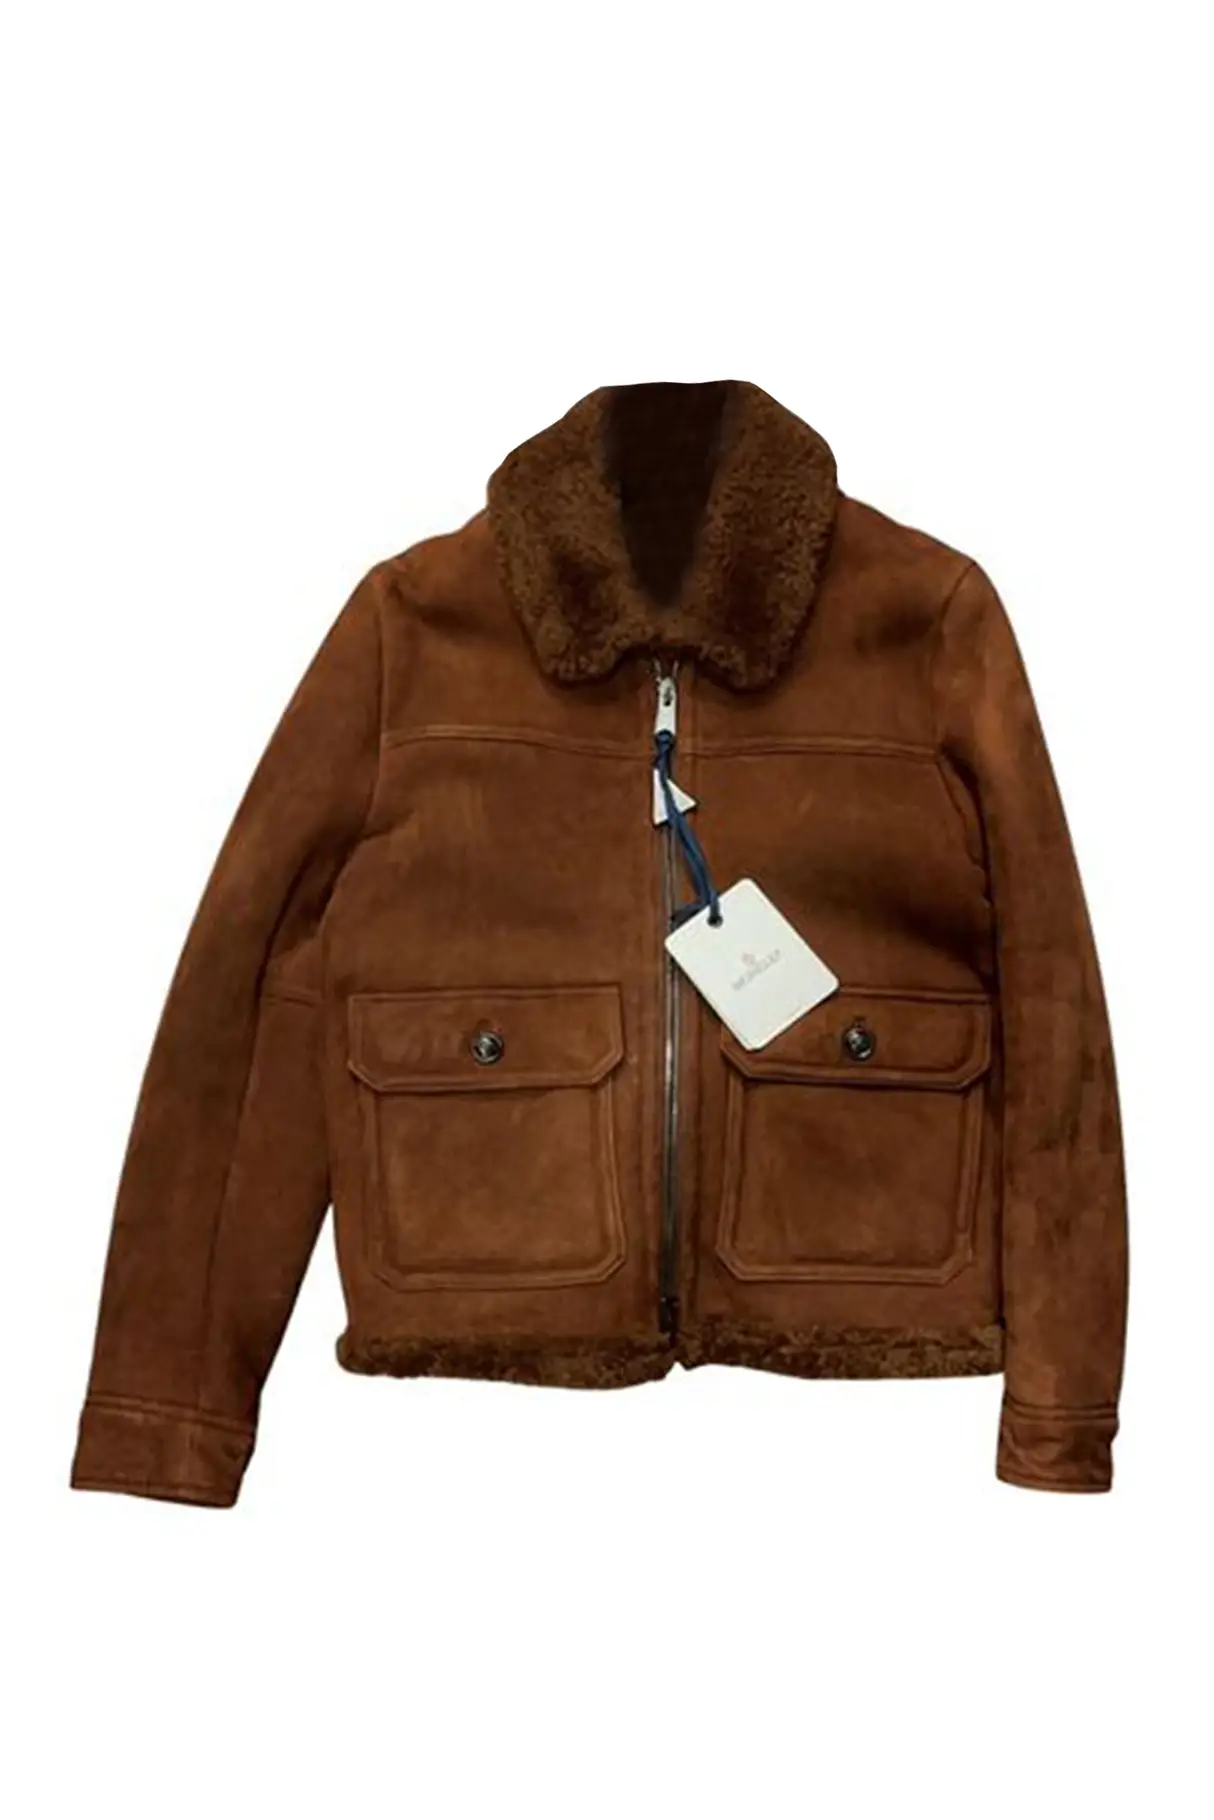 mens-bomber-jacket-moncler-brown-leather